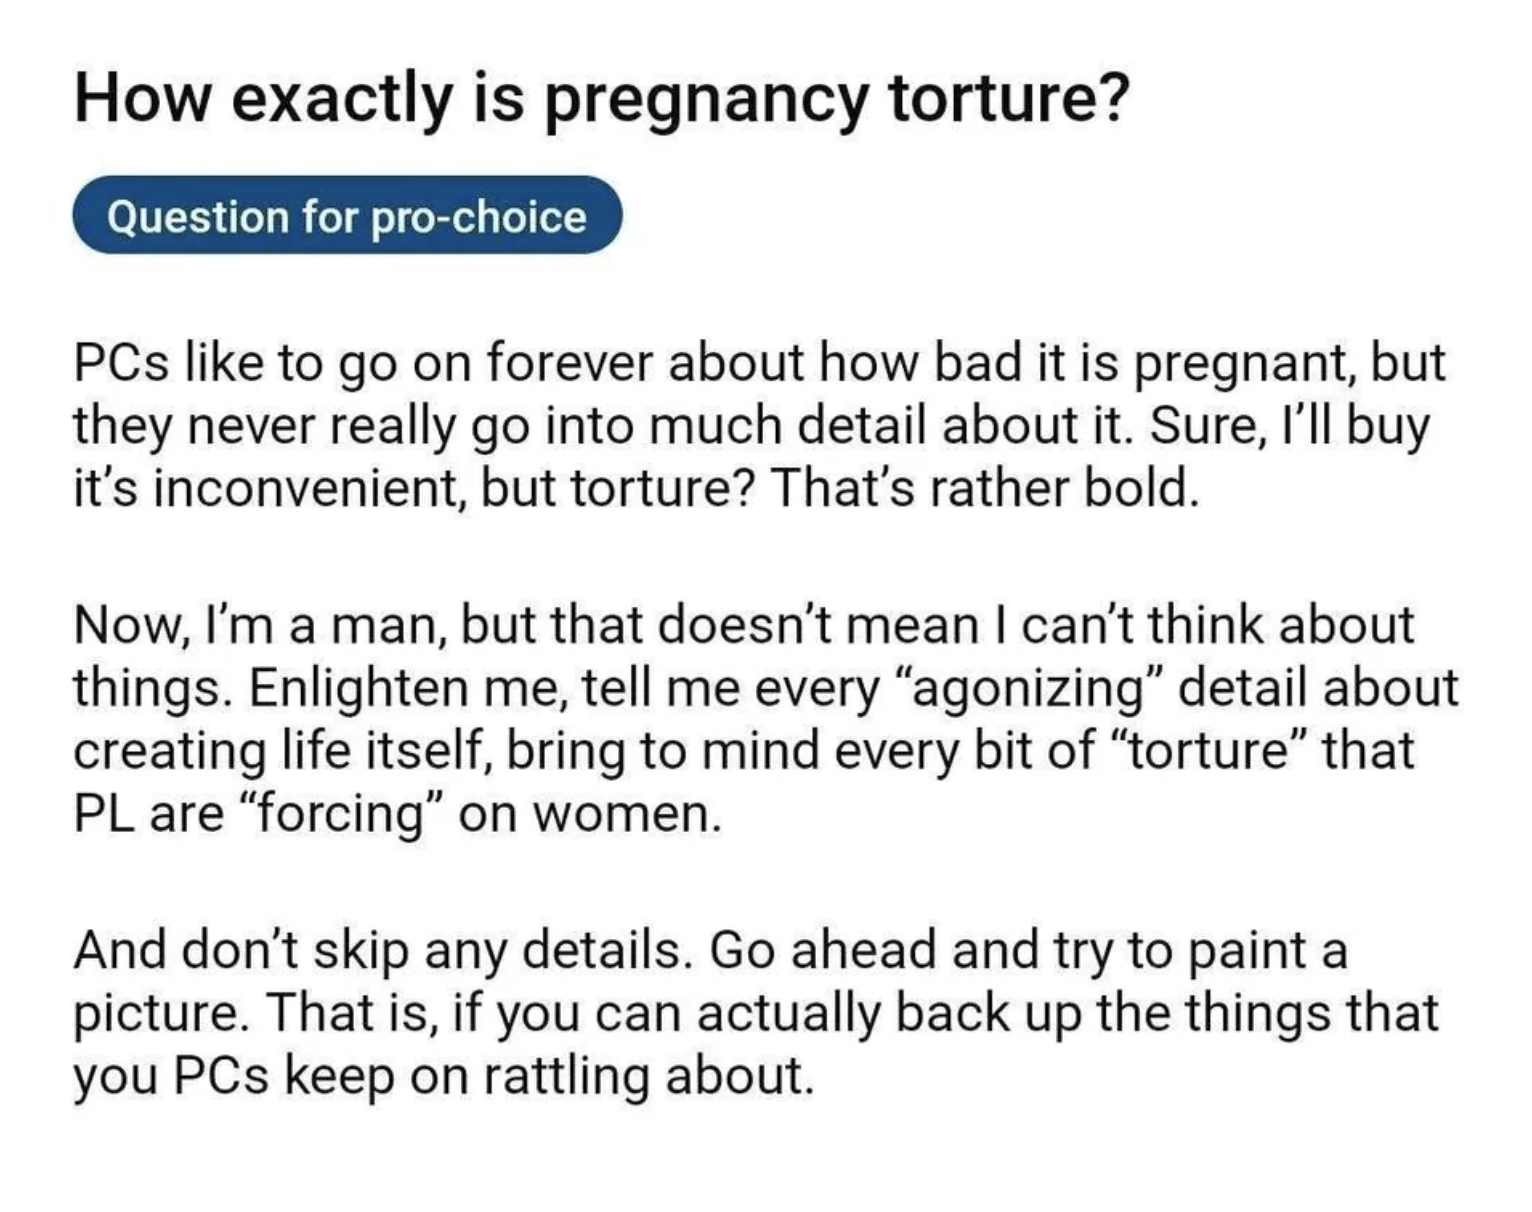 &quot;How exactly is pregnancy torture?&quot;